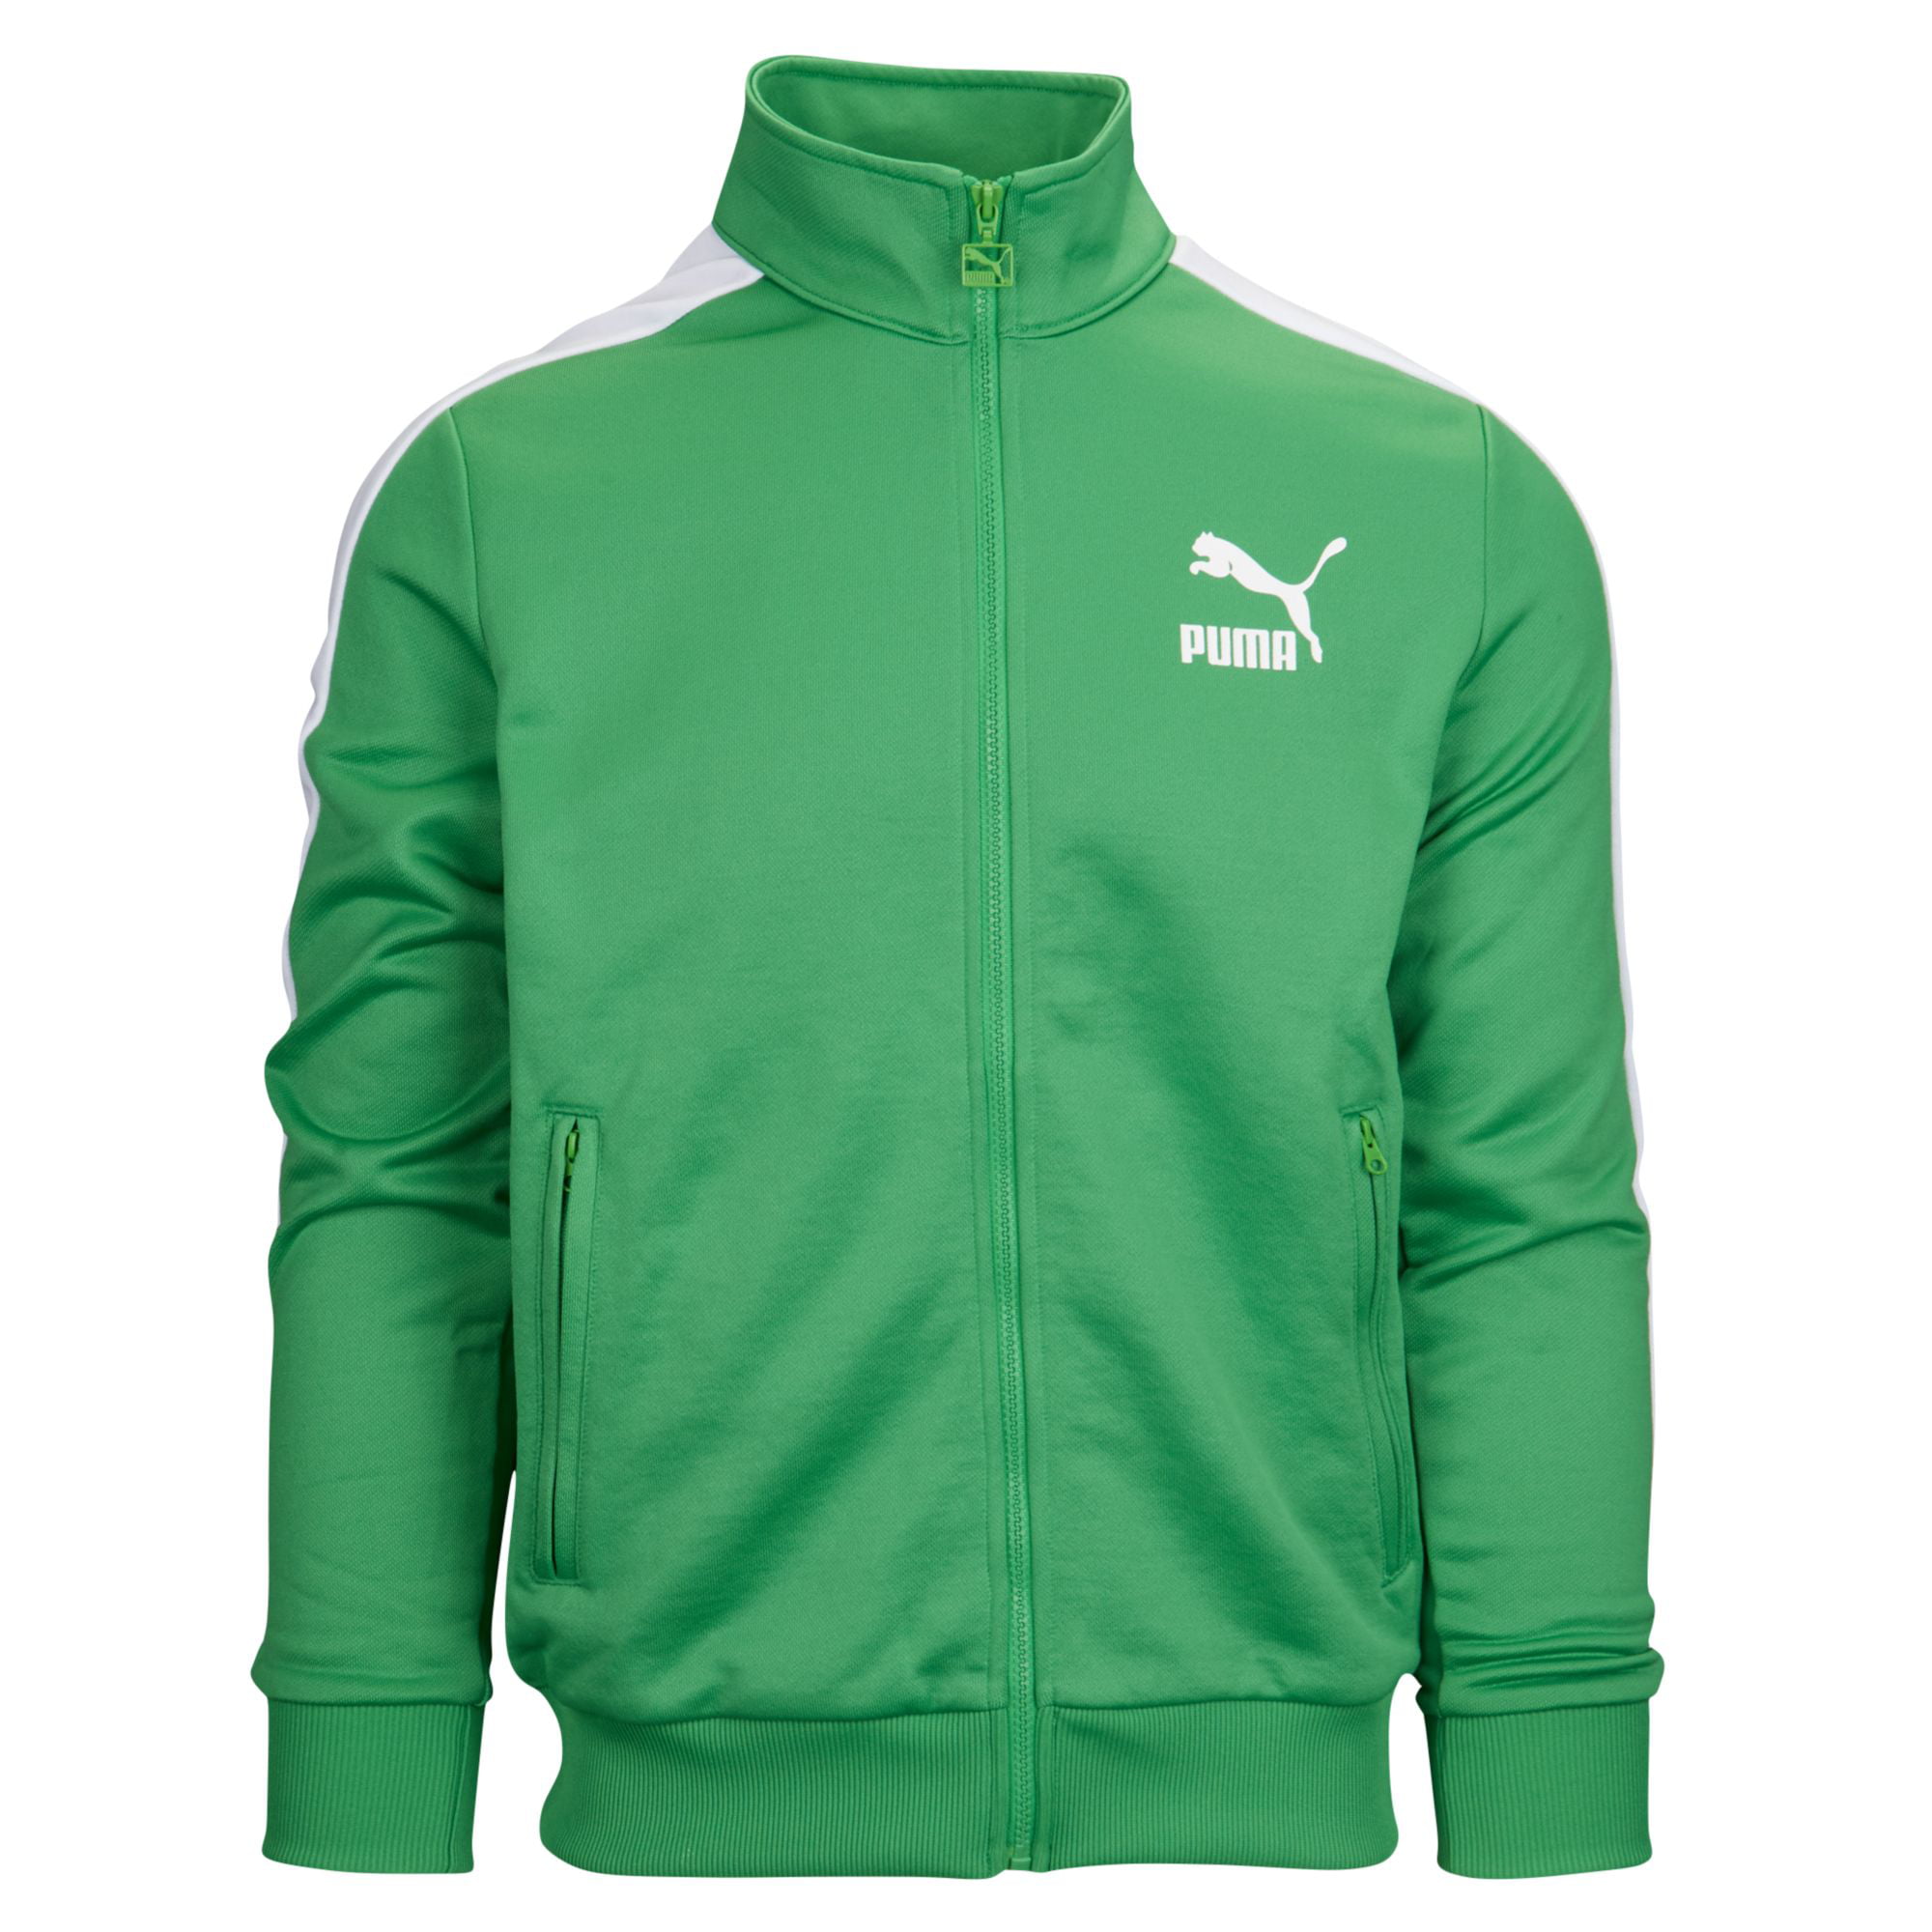 green puma track jacket